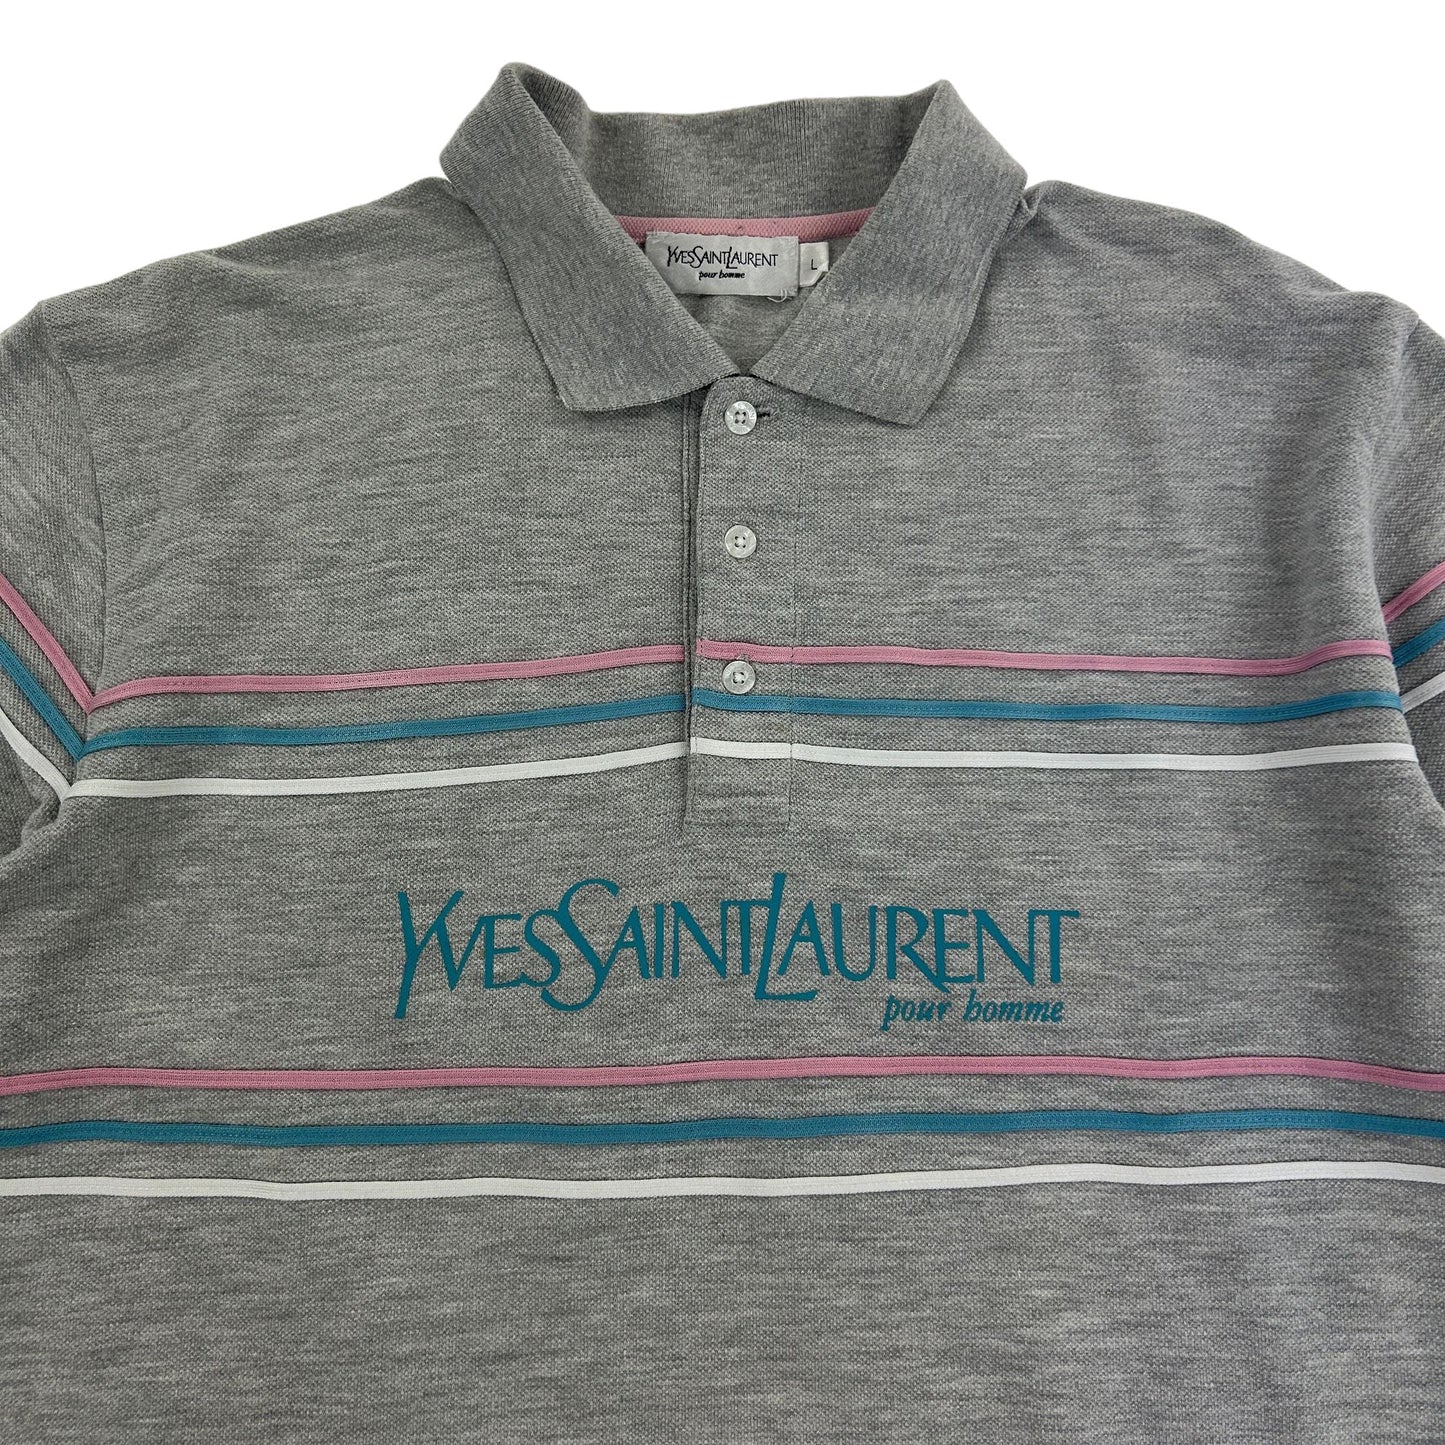 Vintage Yves Saint Laurent Striped Polo Shirt Size M